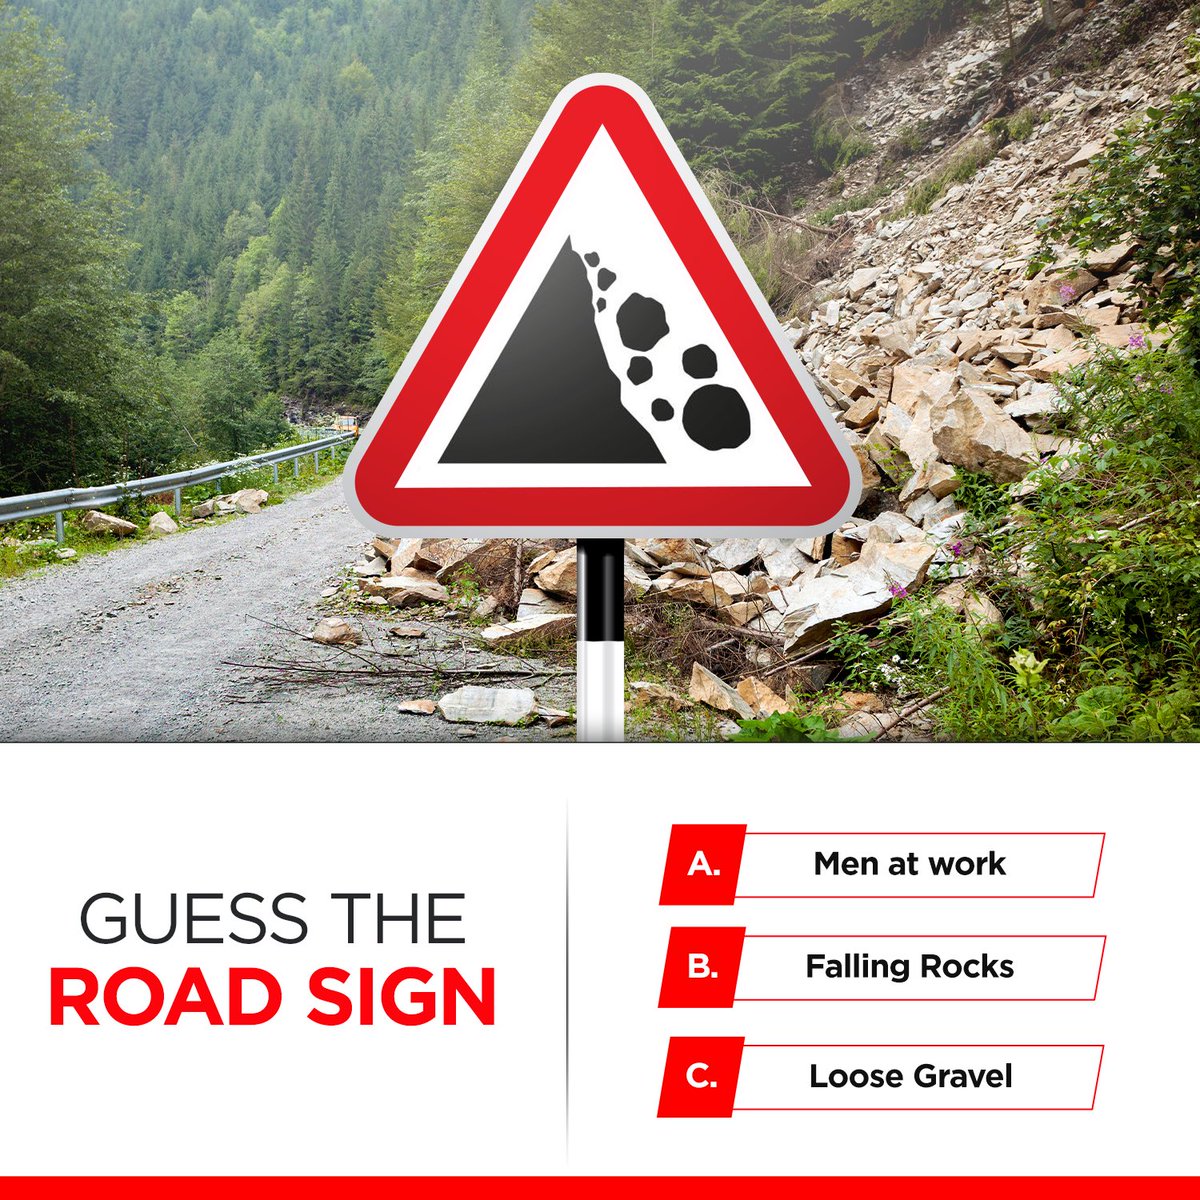 Guess the road sign.

#Honda #ThePowerOfDreams